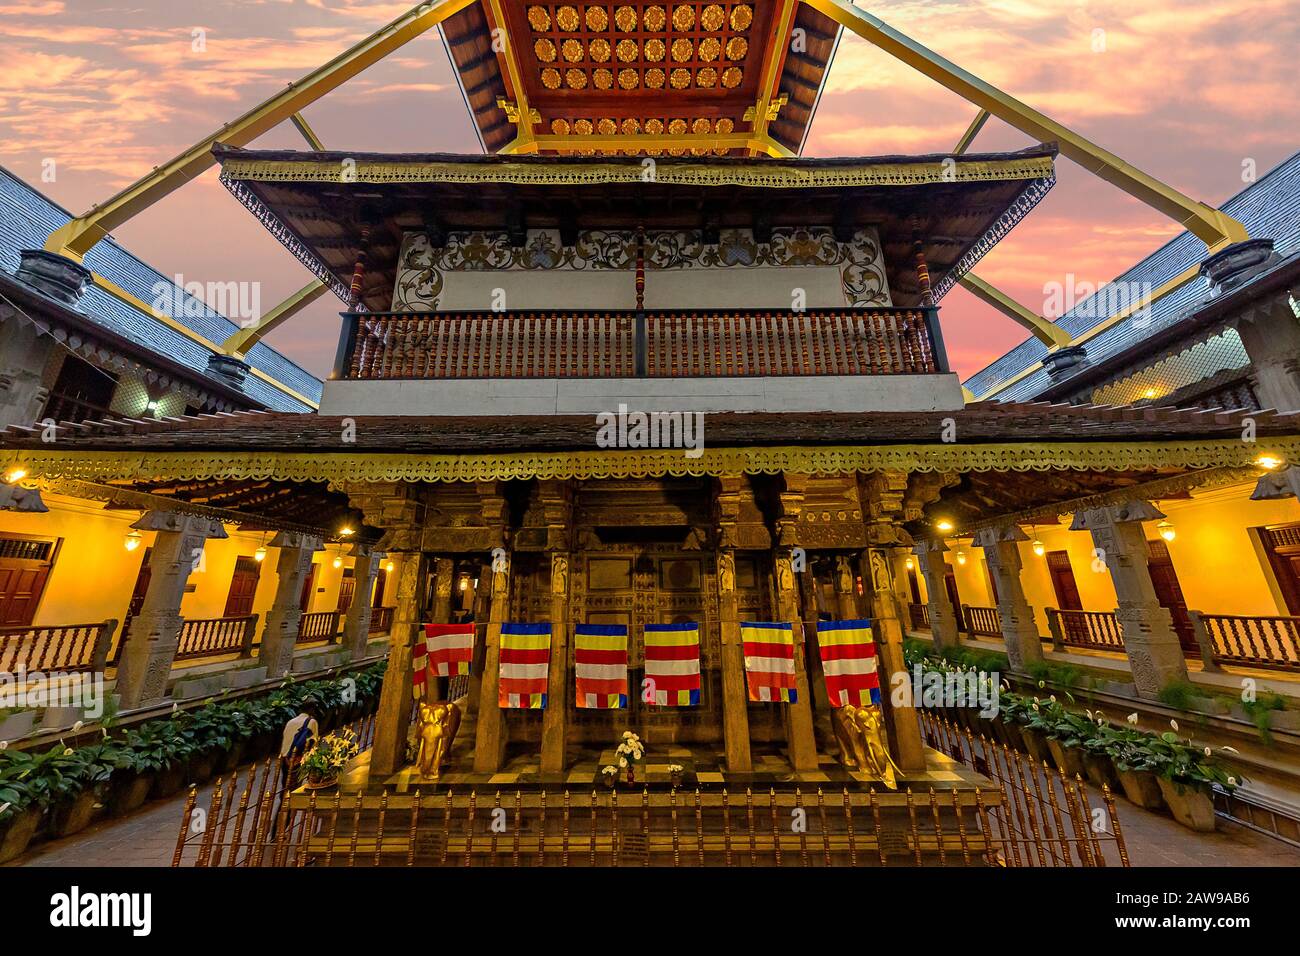 Tempel der Zahnrelika bei Sonnenaufgang in Kandy, Sri Lanka Stockfoto